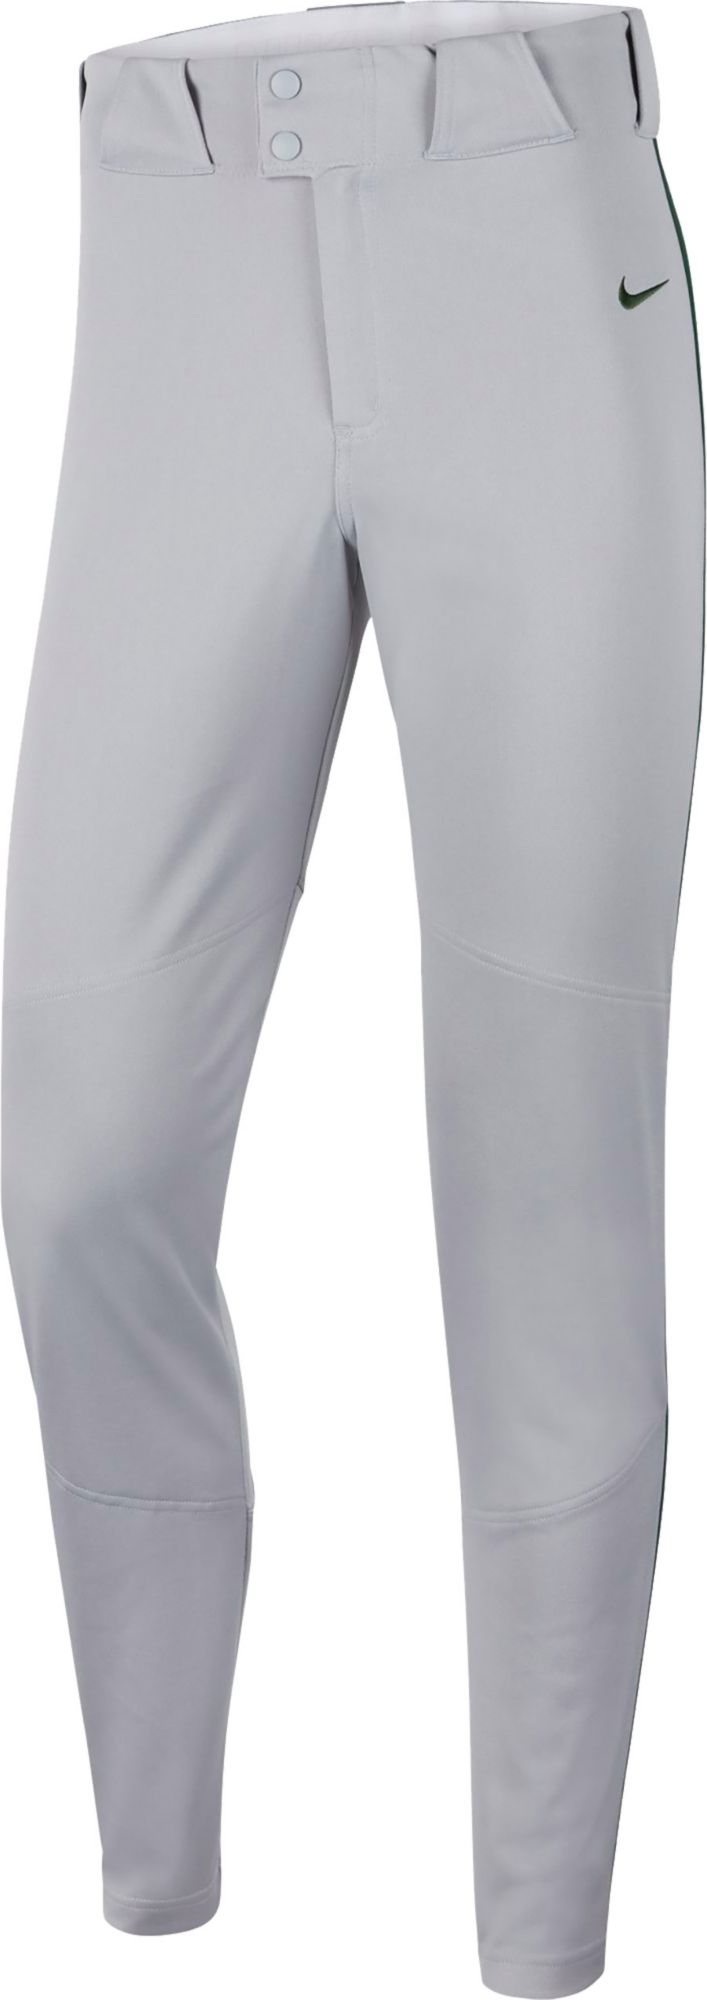 Vapor Select Piped Baseball Pants 